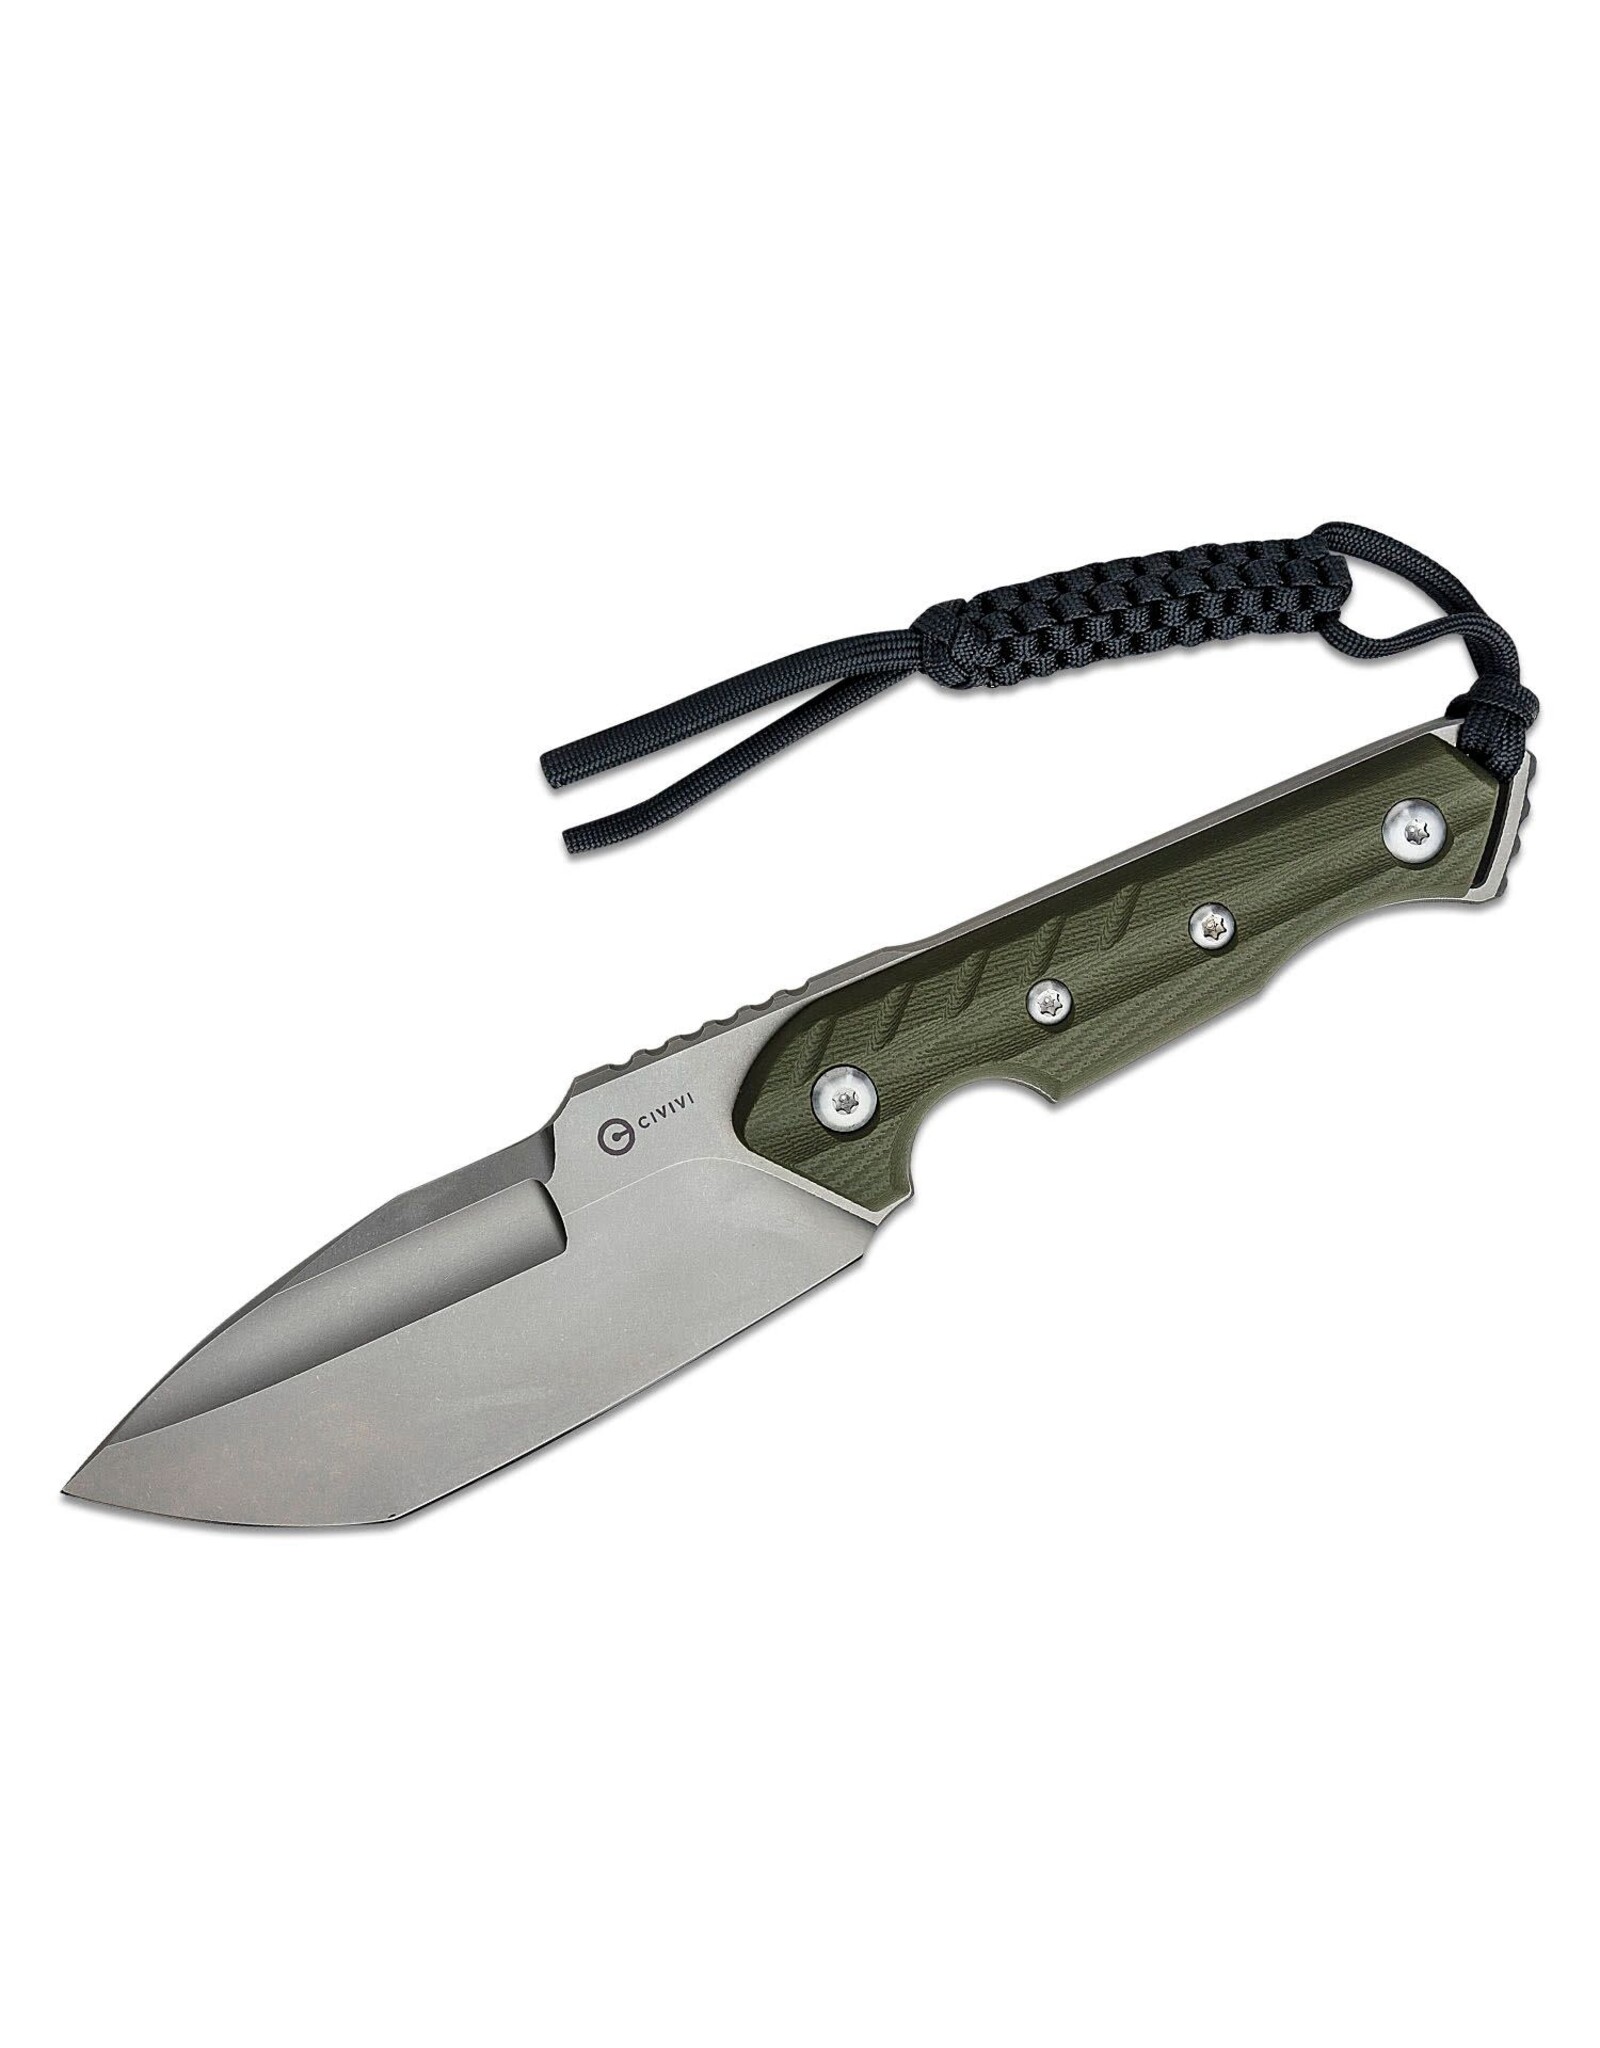 Civivi CIVIVI Knives Maciej Torbe Maxwell Fixed Blade Knife 4.74" D2 Stonewashed Spear Point Tanto, OD Green G10 Handles, Kydex Sheath - C21040-2